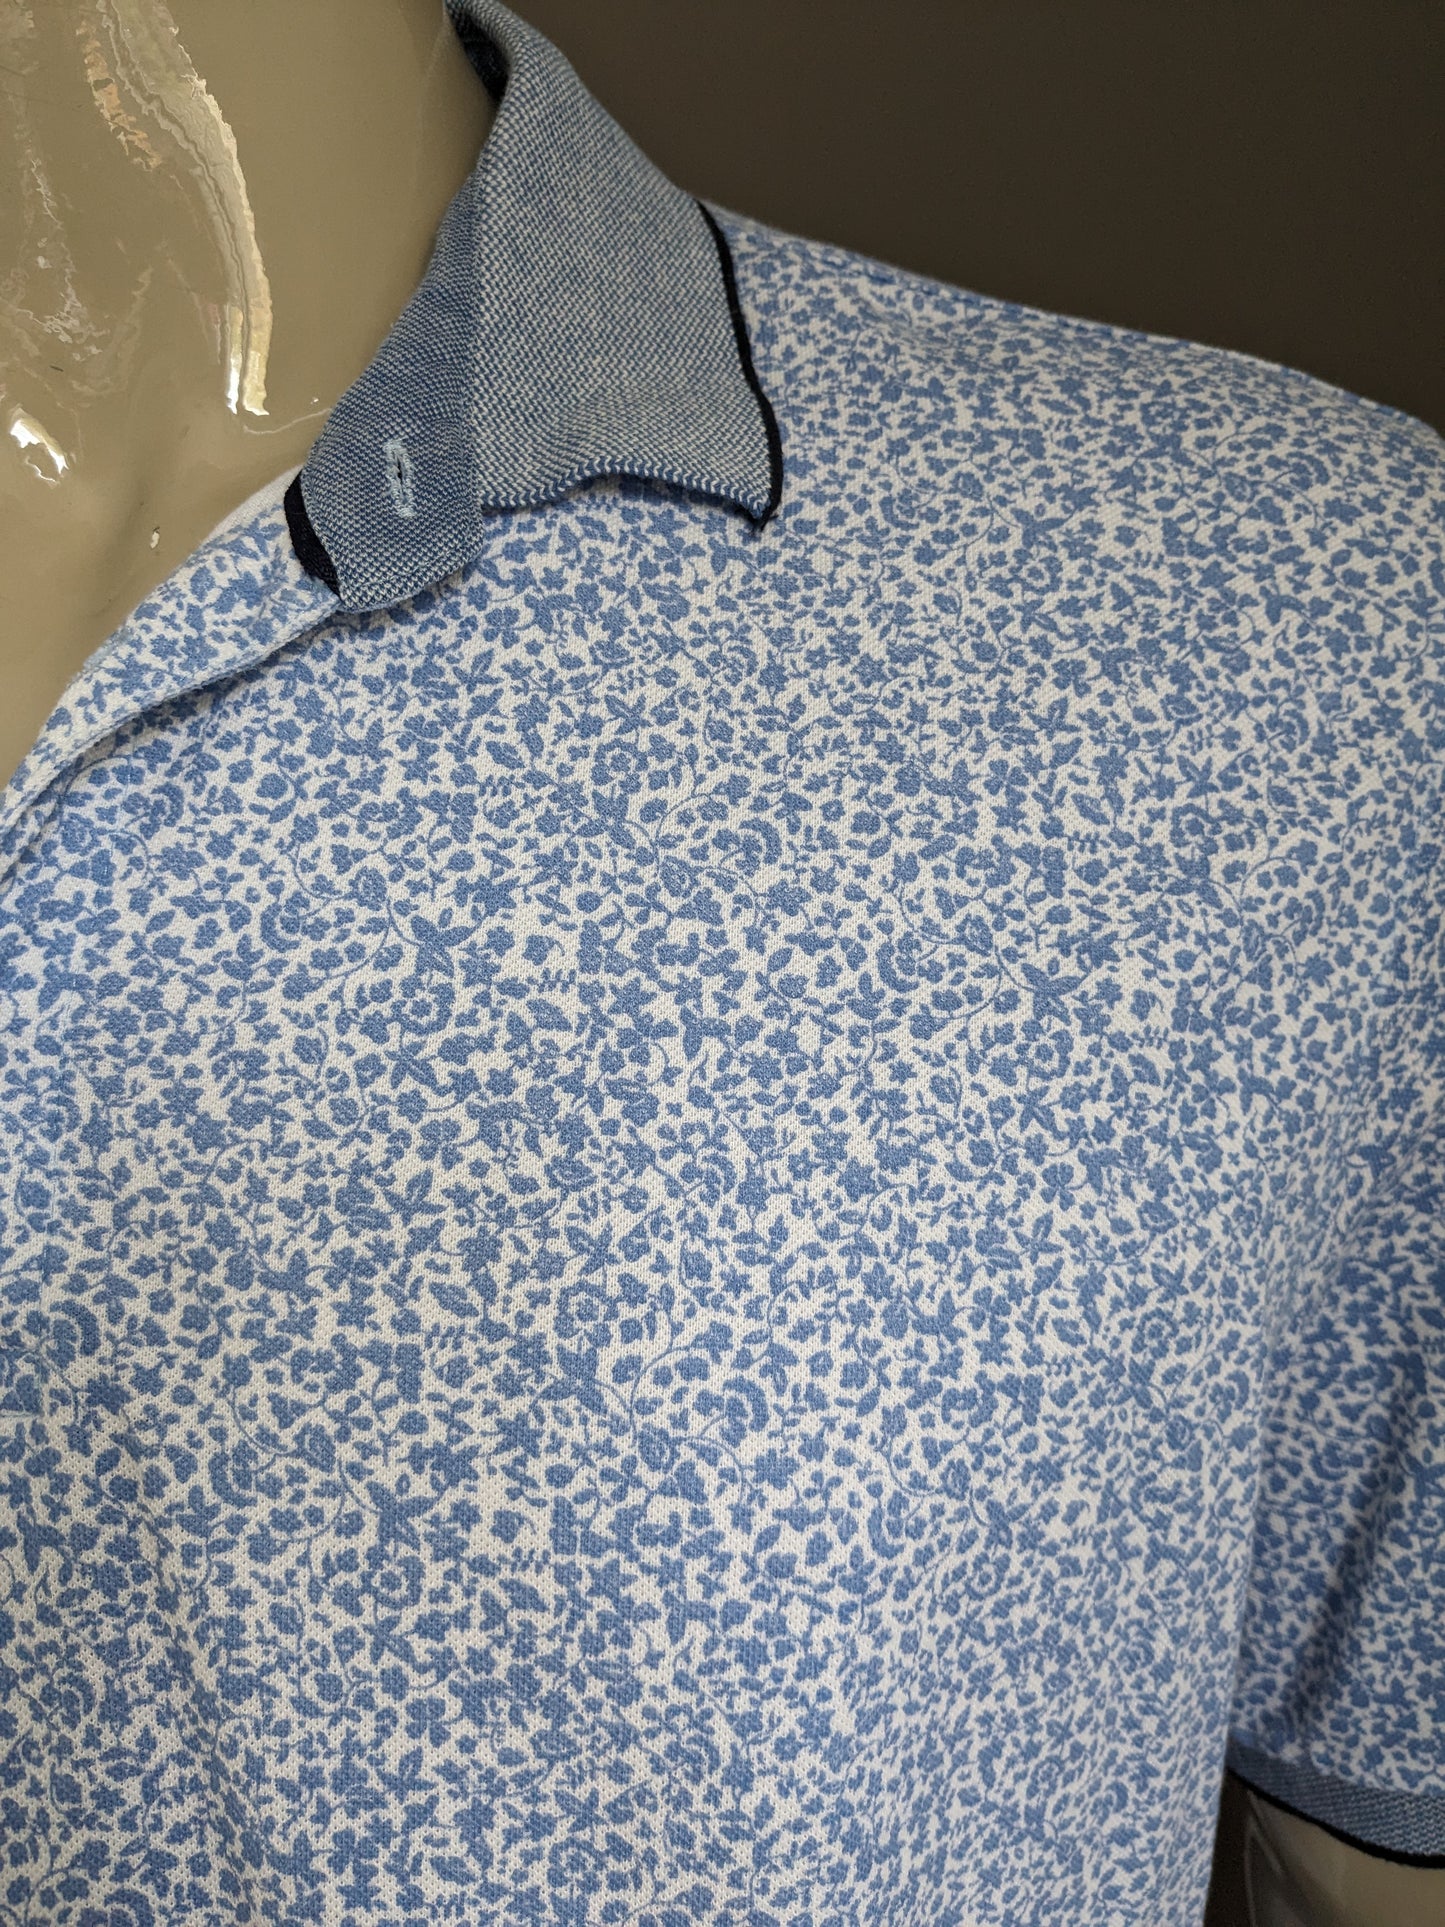 Westbury Premium Polo. Blue white flowers print. Size 2XL / XXL.